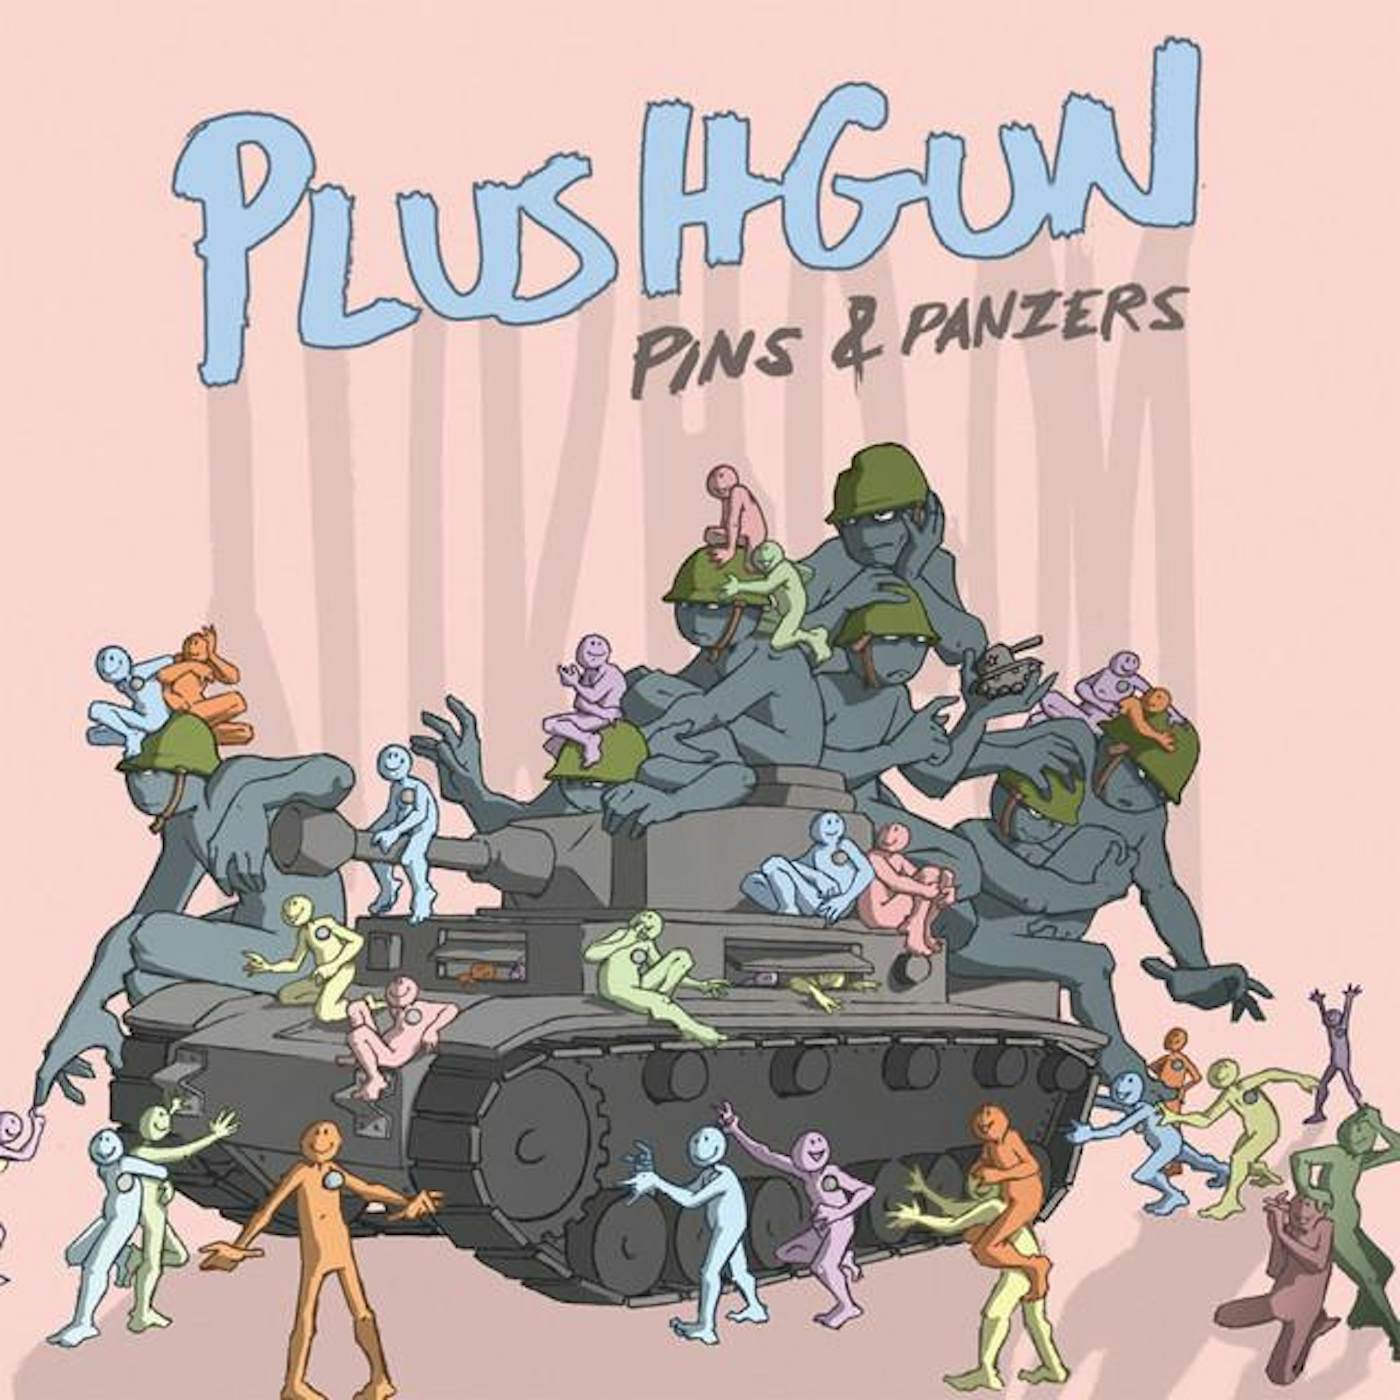 Plushgun